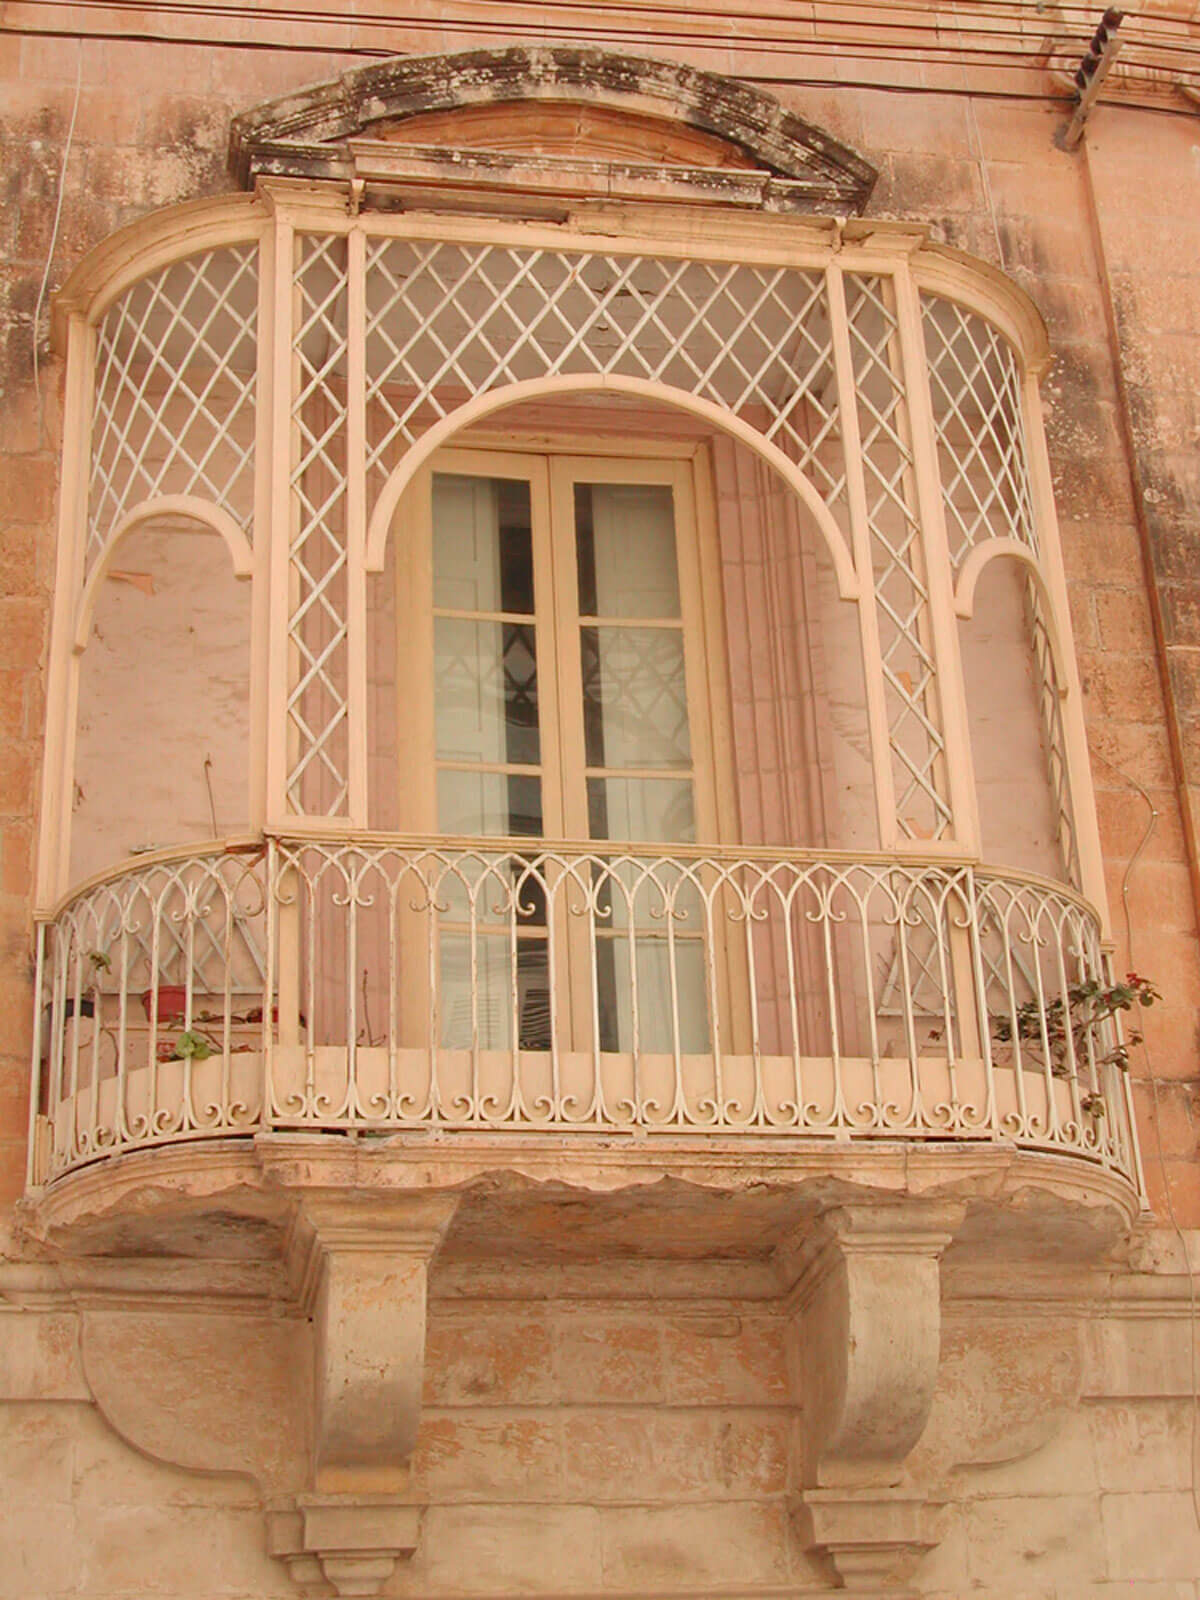 Photo of the facade detail in Mdina in Malta